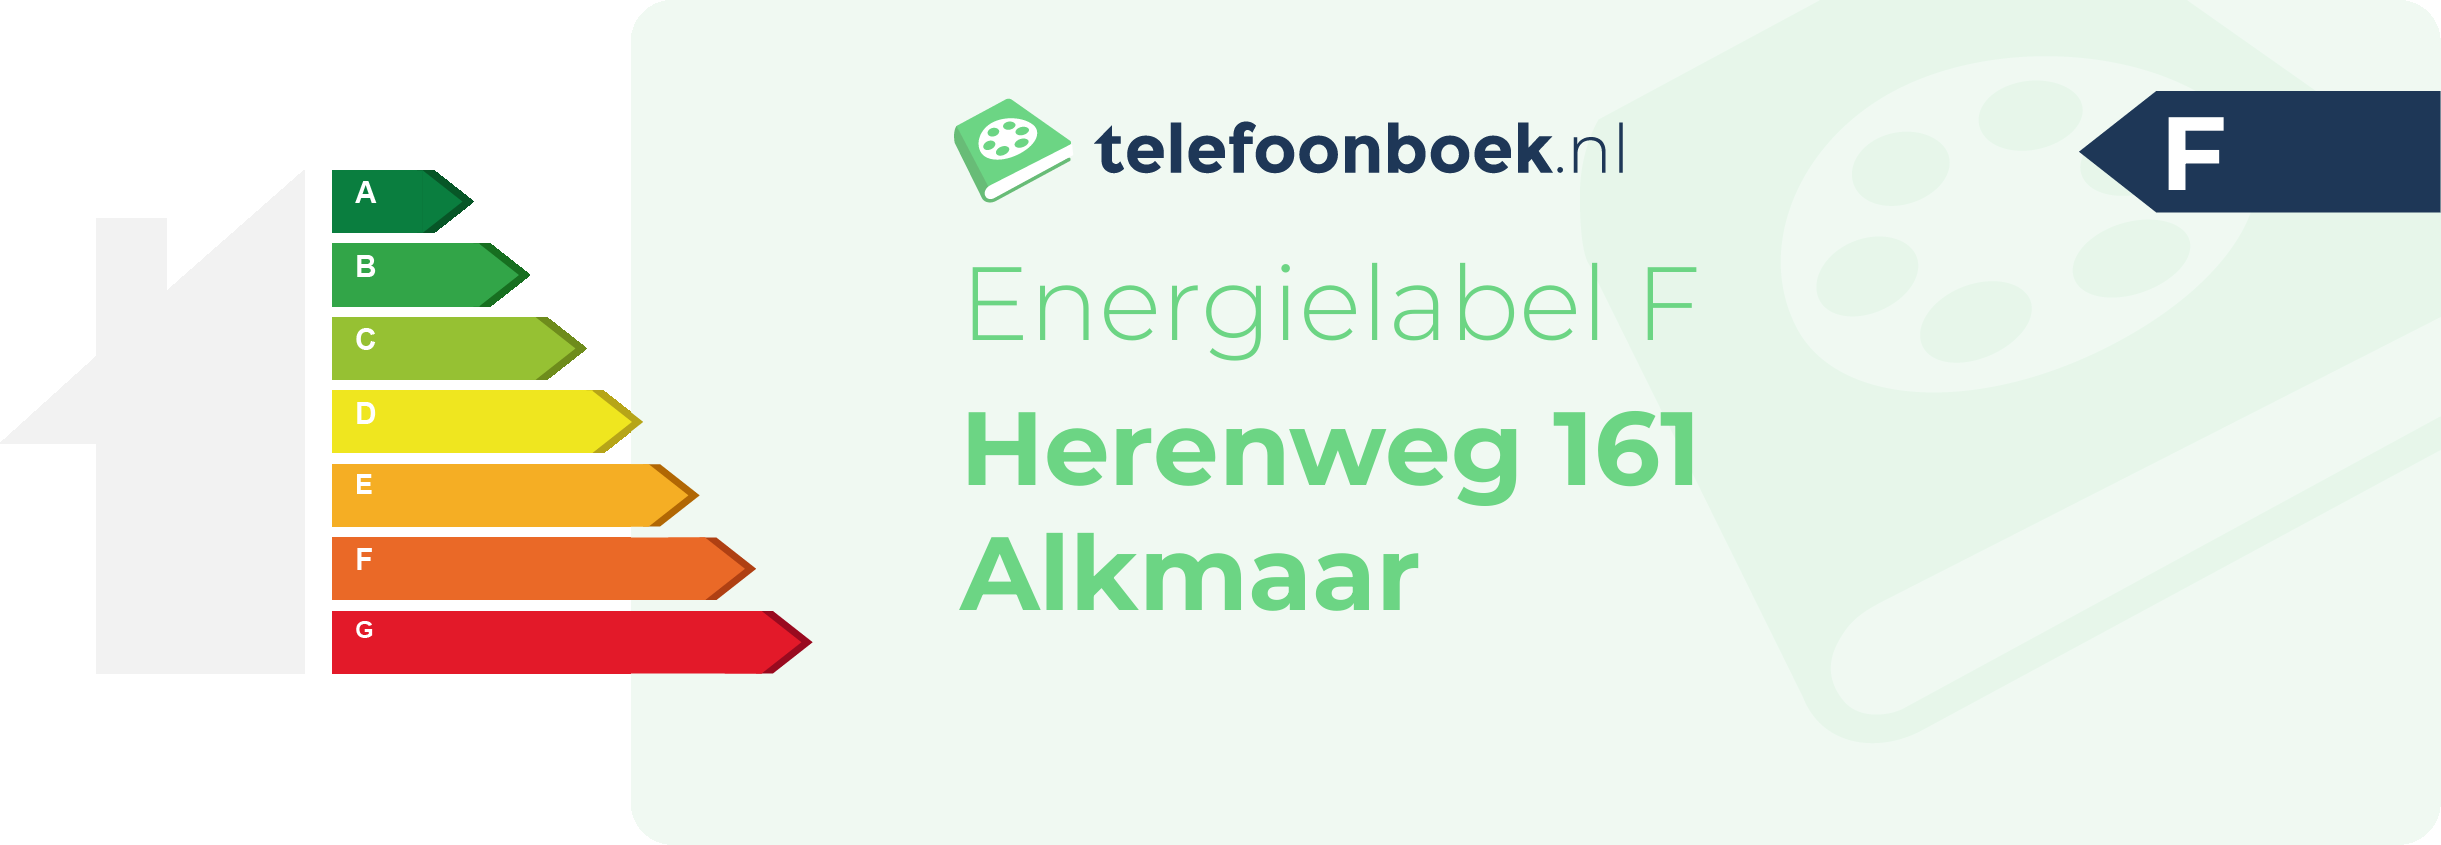 Energielabel Herenweg 161 Alkmaar